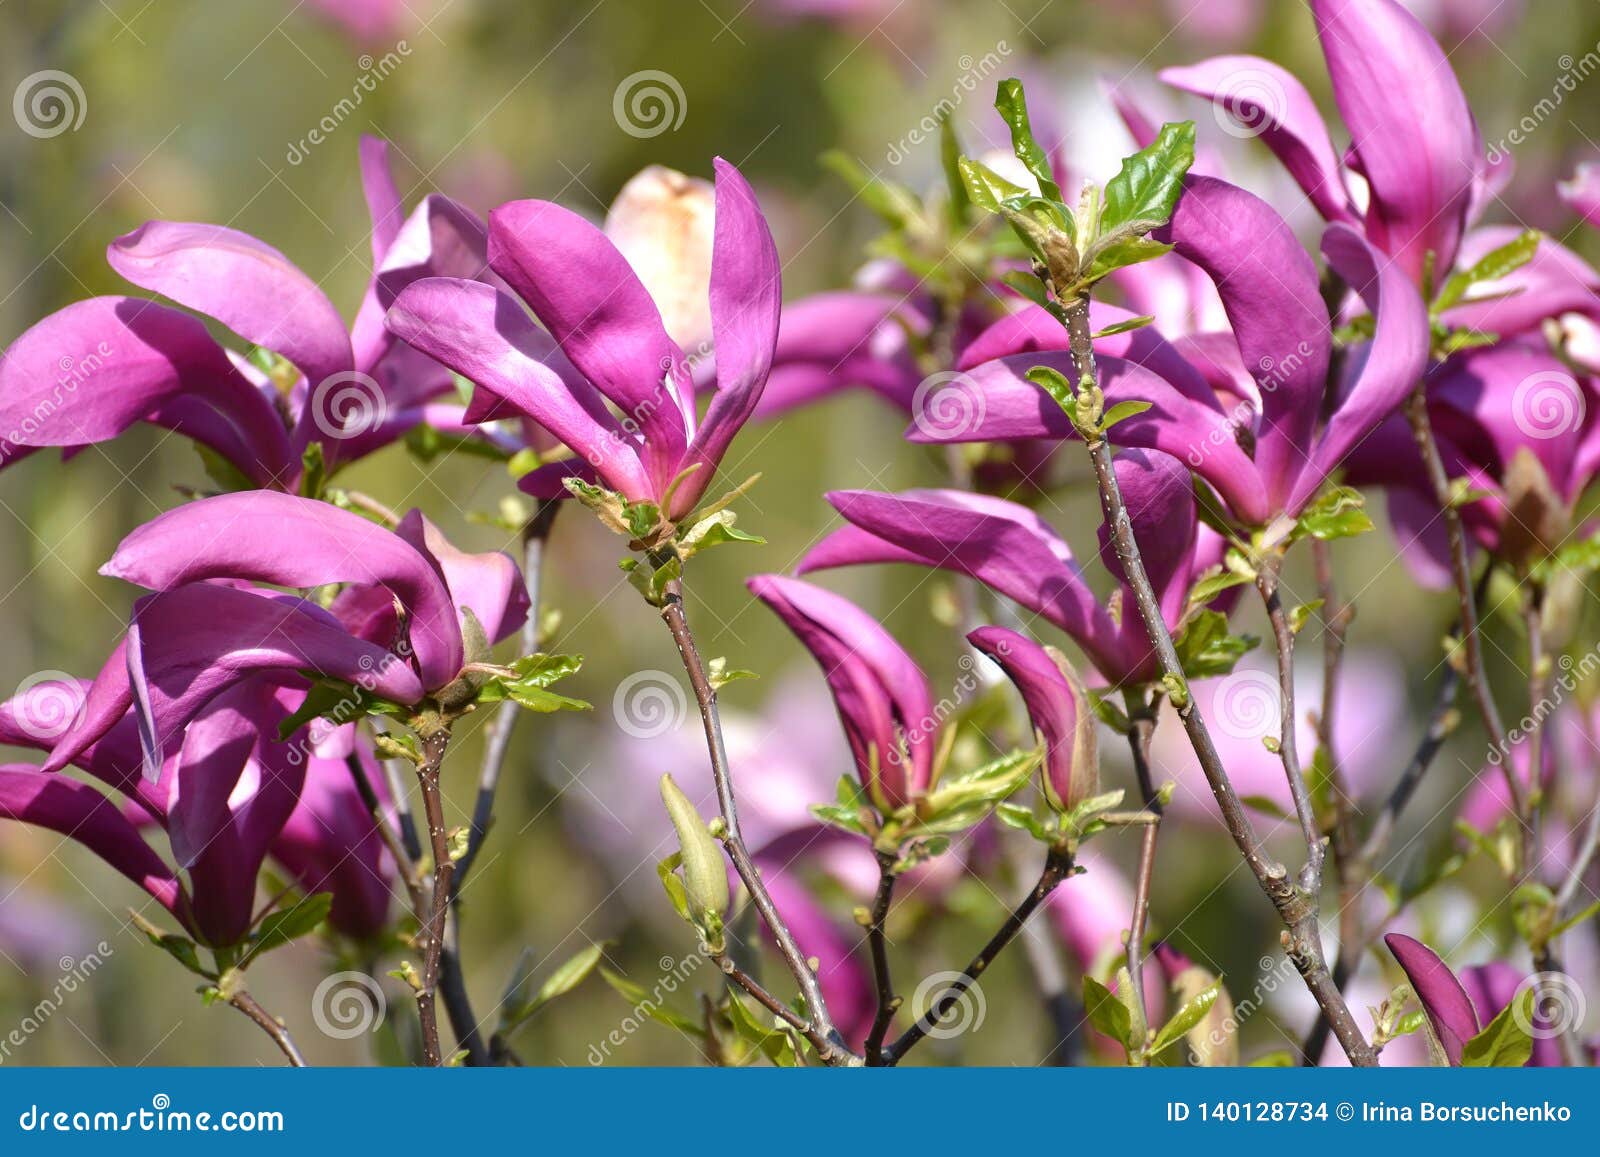 purple flowers of a lily magnolia magnolia liliiflora desr. close up